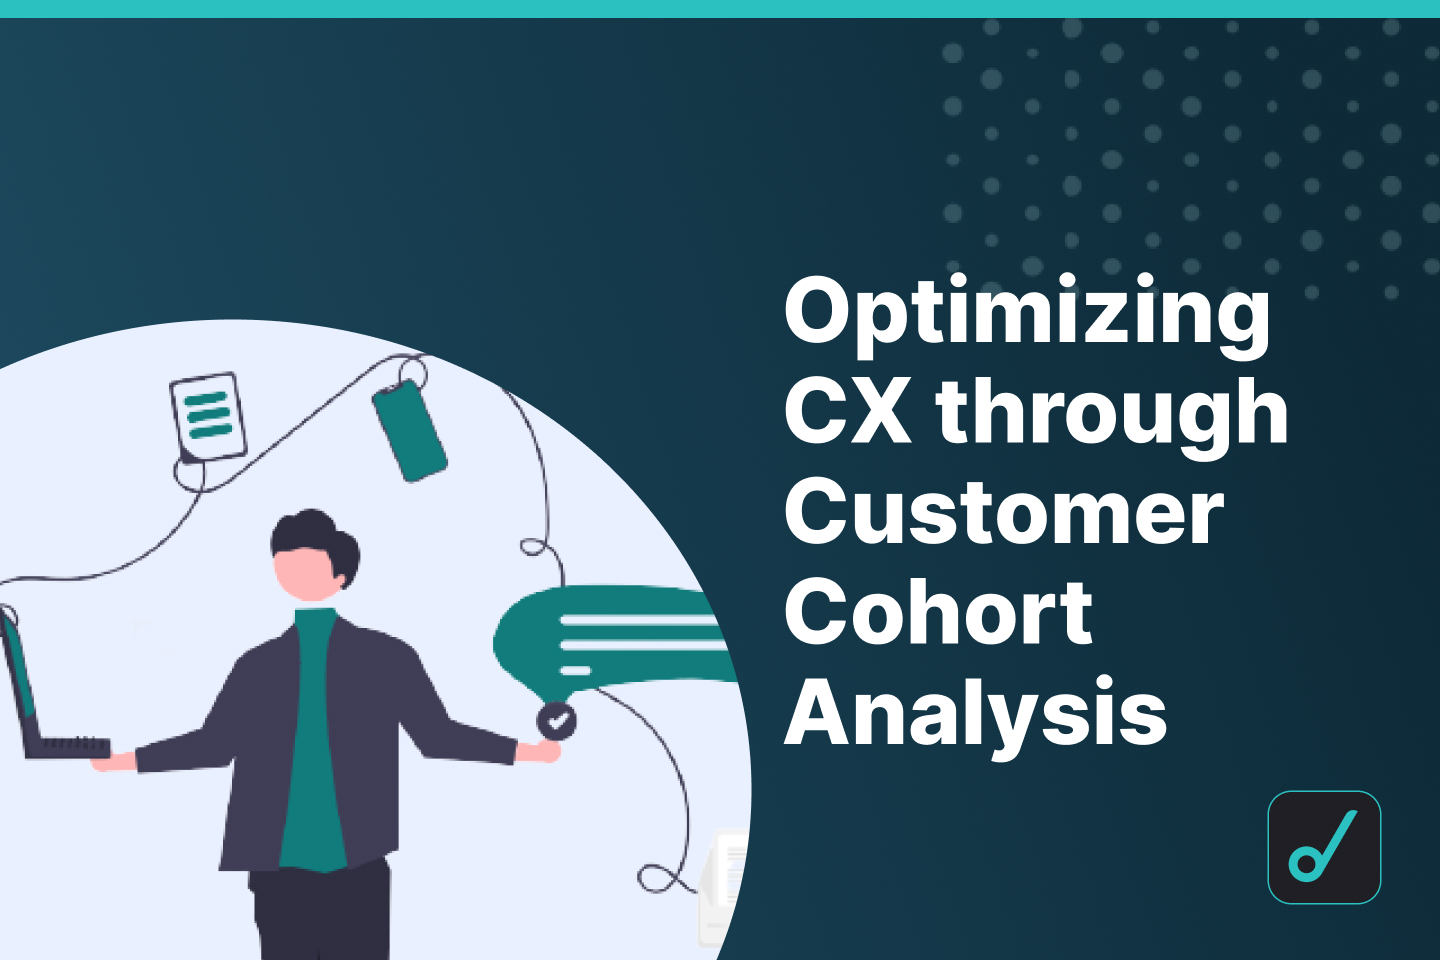 Using Customer Cohort Analysis to Optimize the Customer Experience